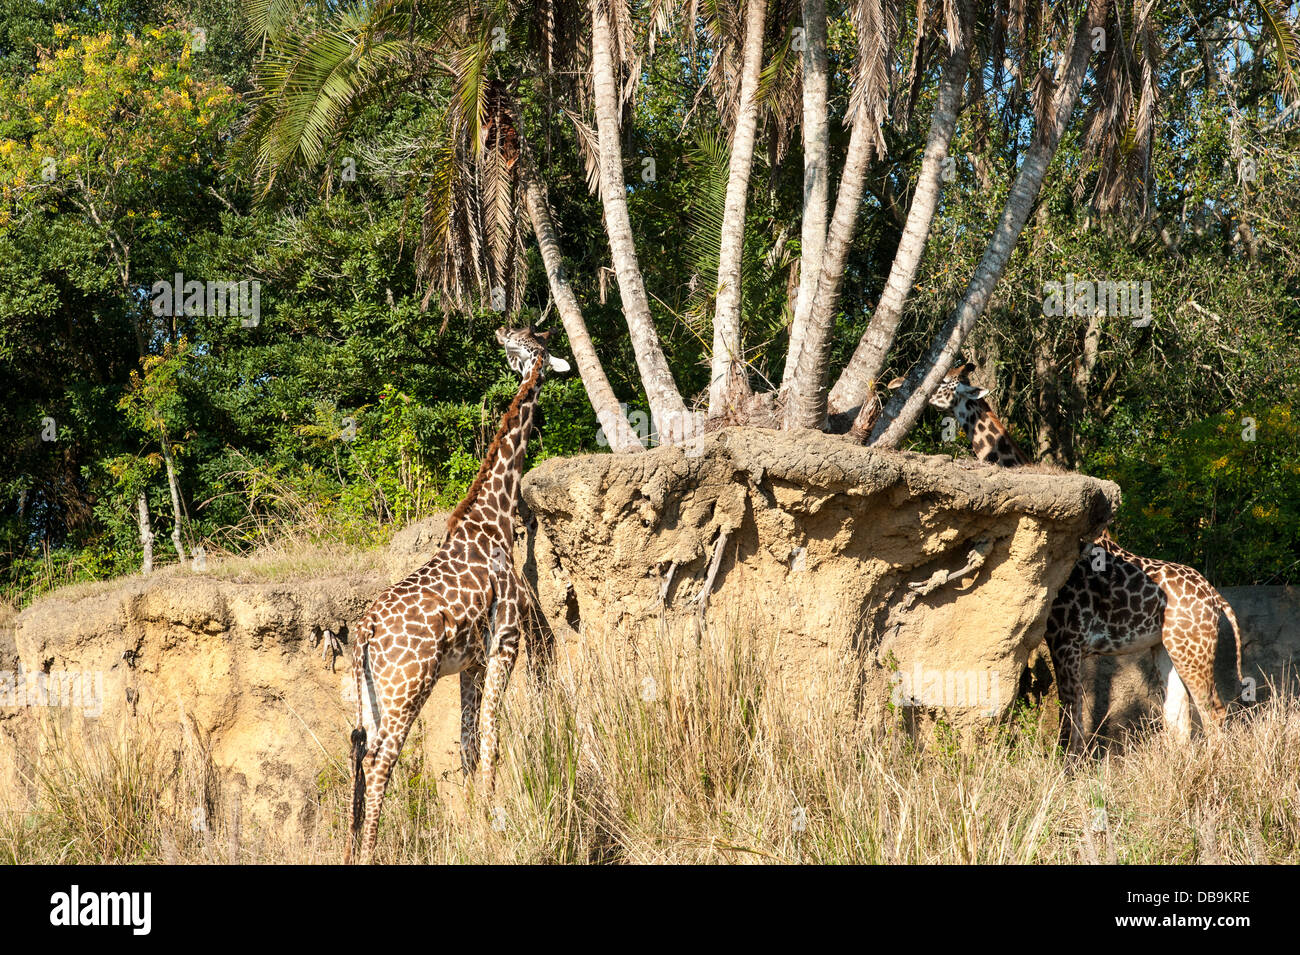 Giraffe eating at Disney's Animal Kingdom at Walt Disney World Resort, Orlando, Florida Stock Photo